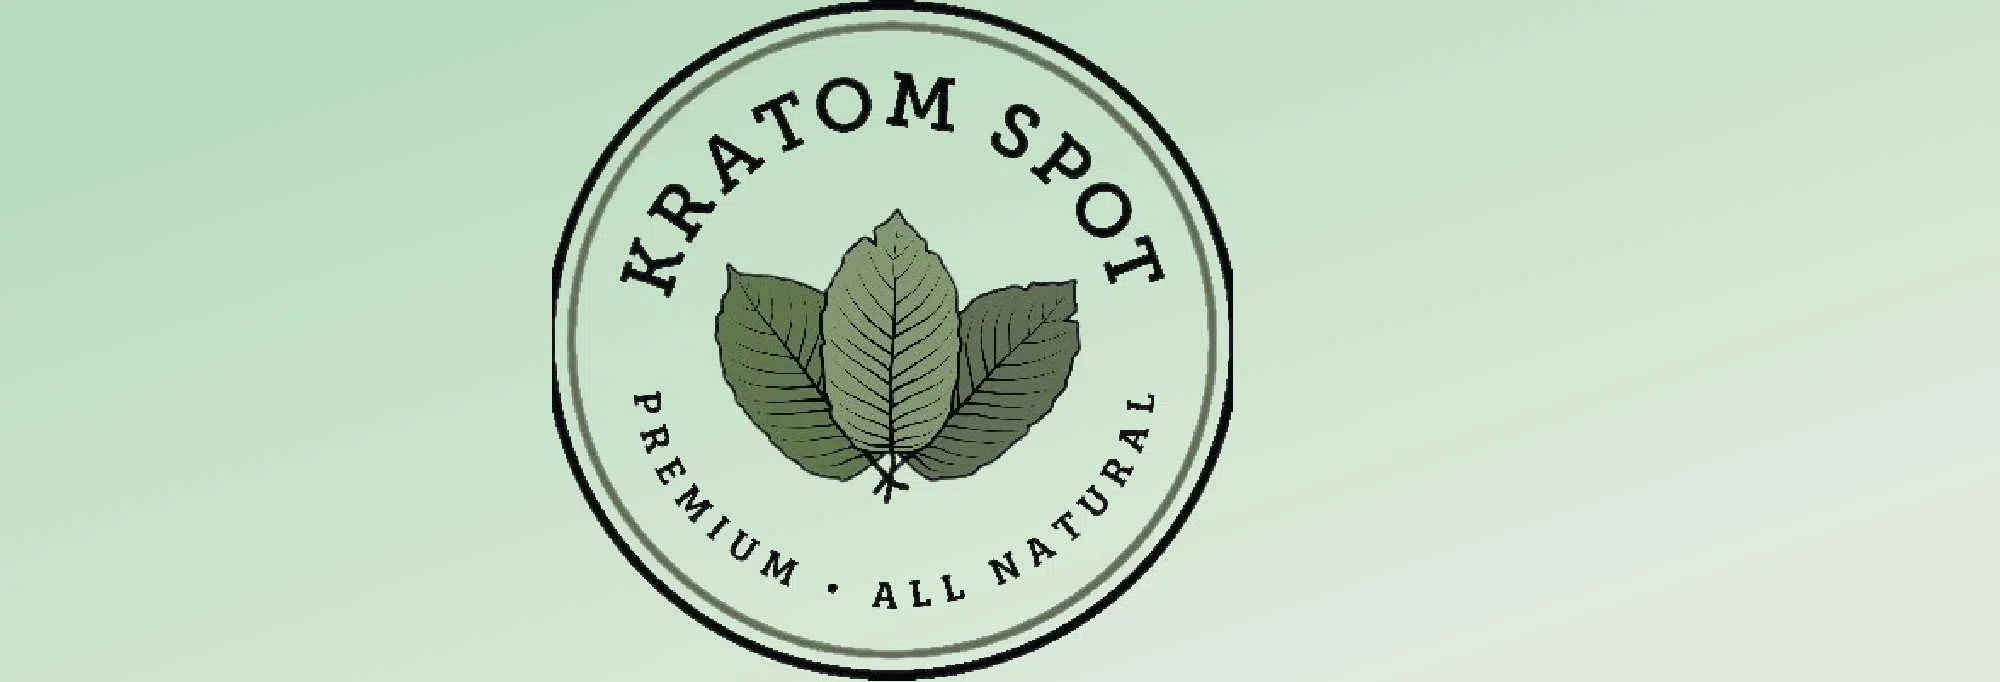 image of kratom spot logo